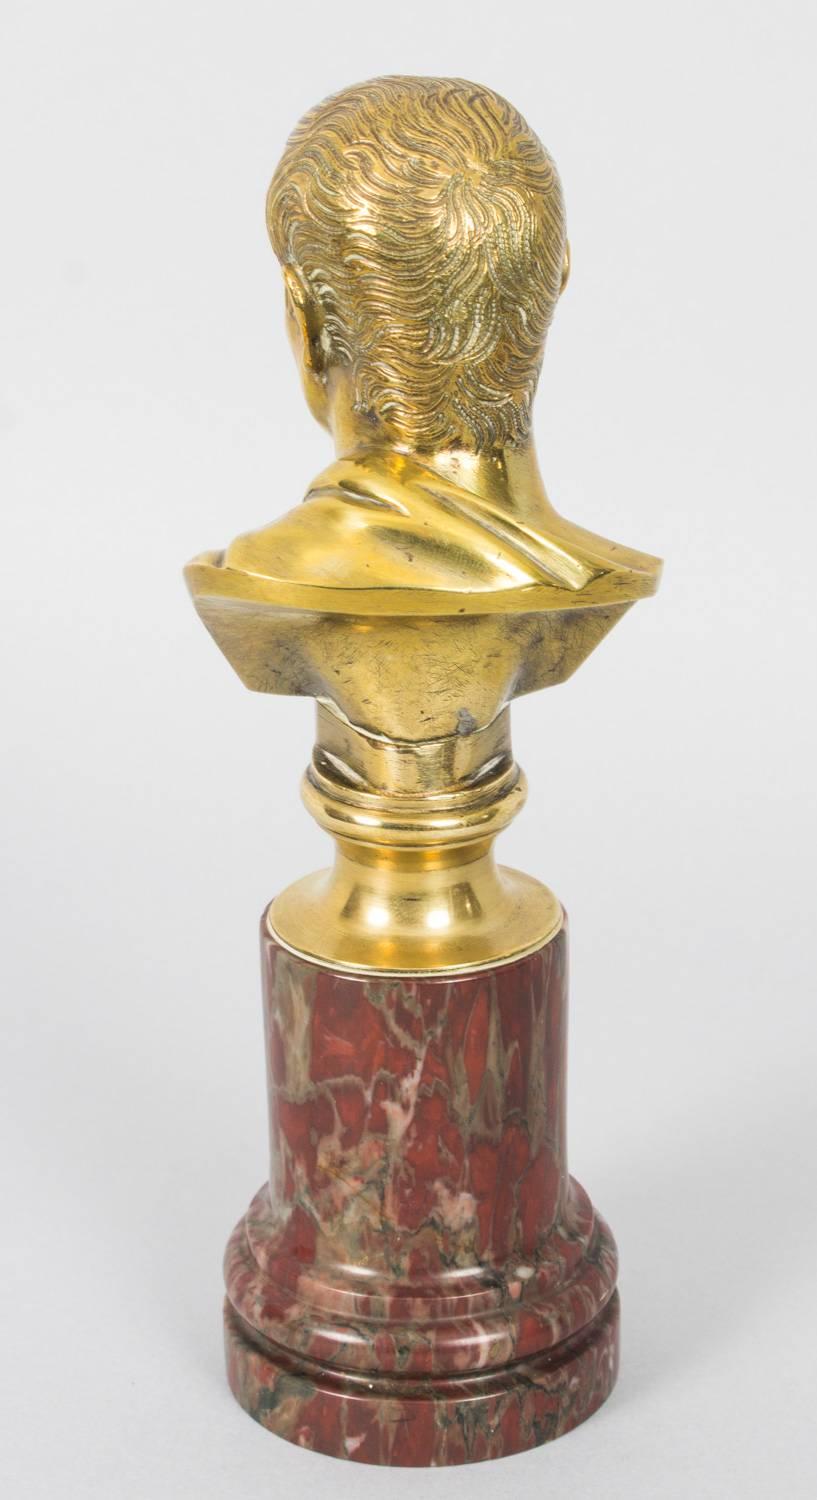 19th Century French Grand Tour Bronze Desk Bust of Roman Emperor Caligula 1